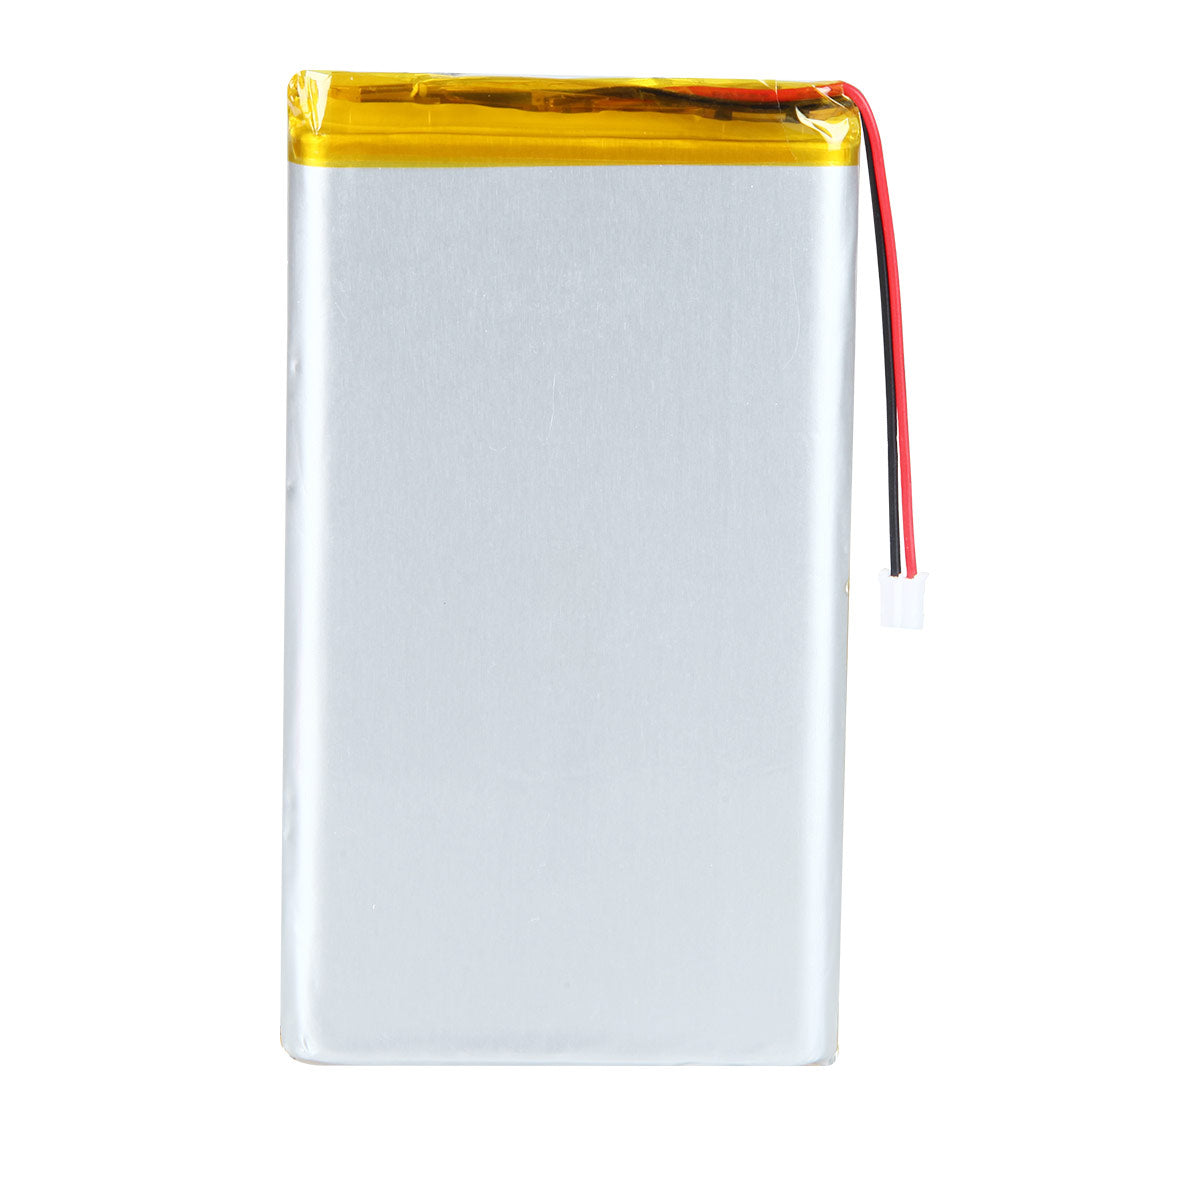 YDL 3.7V 10000mAh 1165114 Batterie Lithium Polymère Rechargeable Longueur 116mm